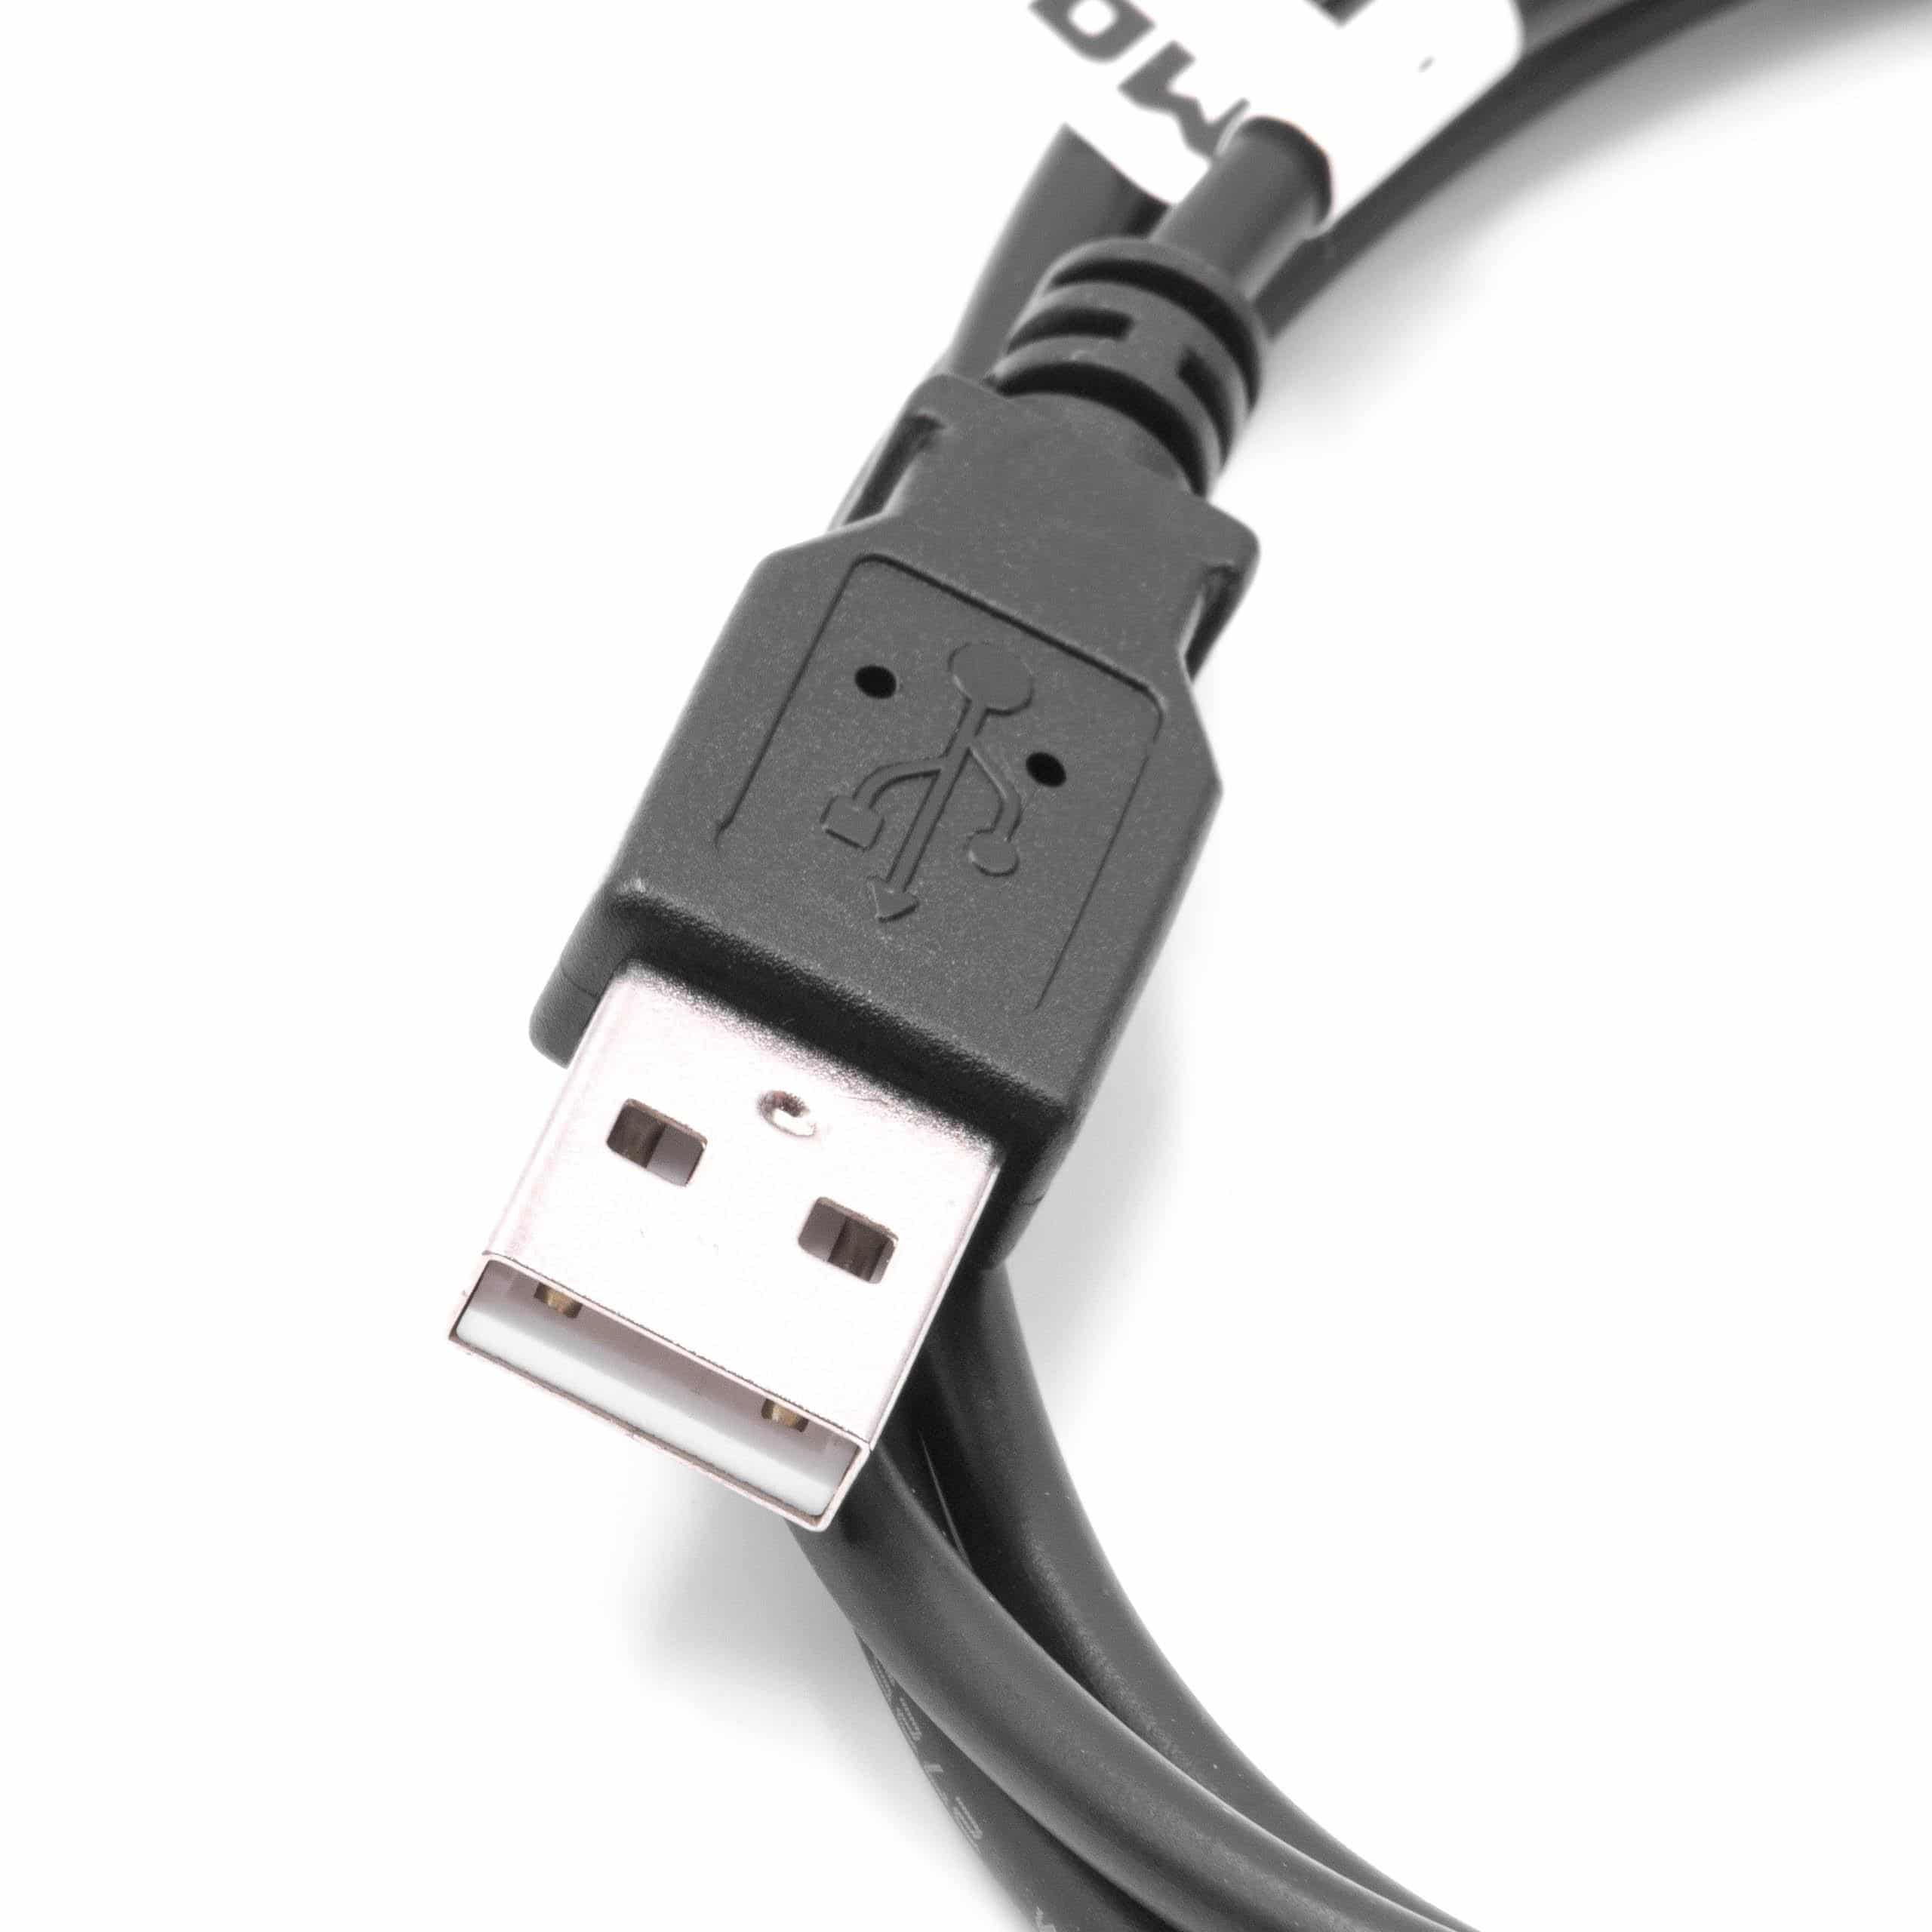 USB Datenkabel Ladekabel passend für Microsoft Zune u.a., 100 cm